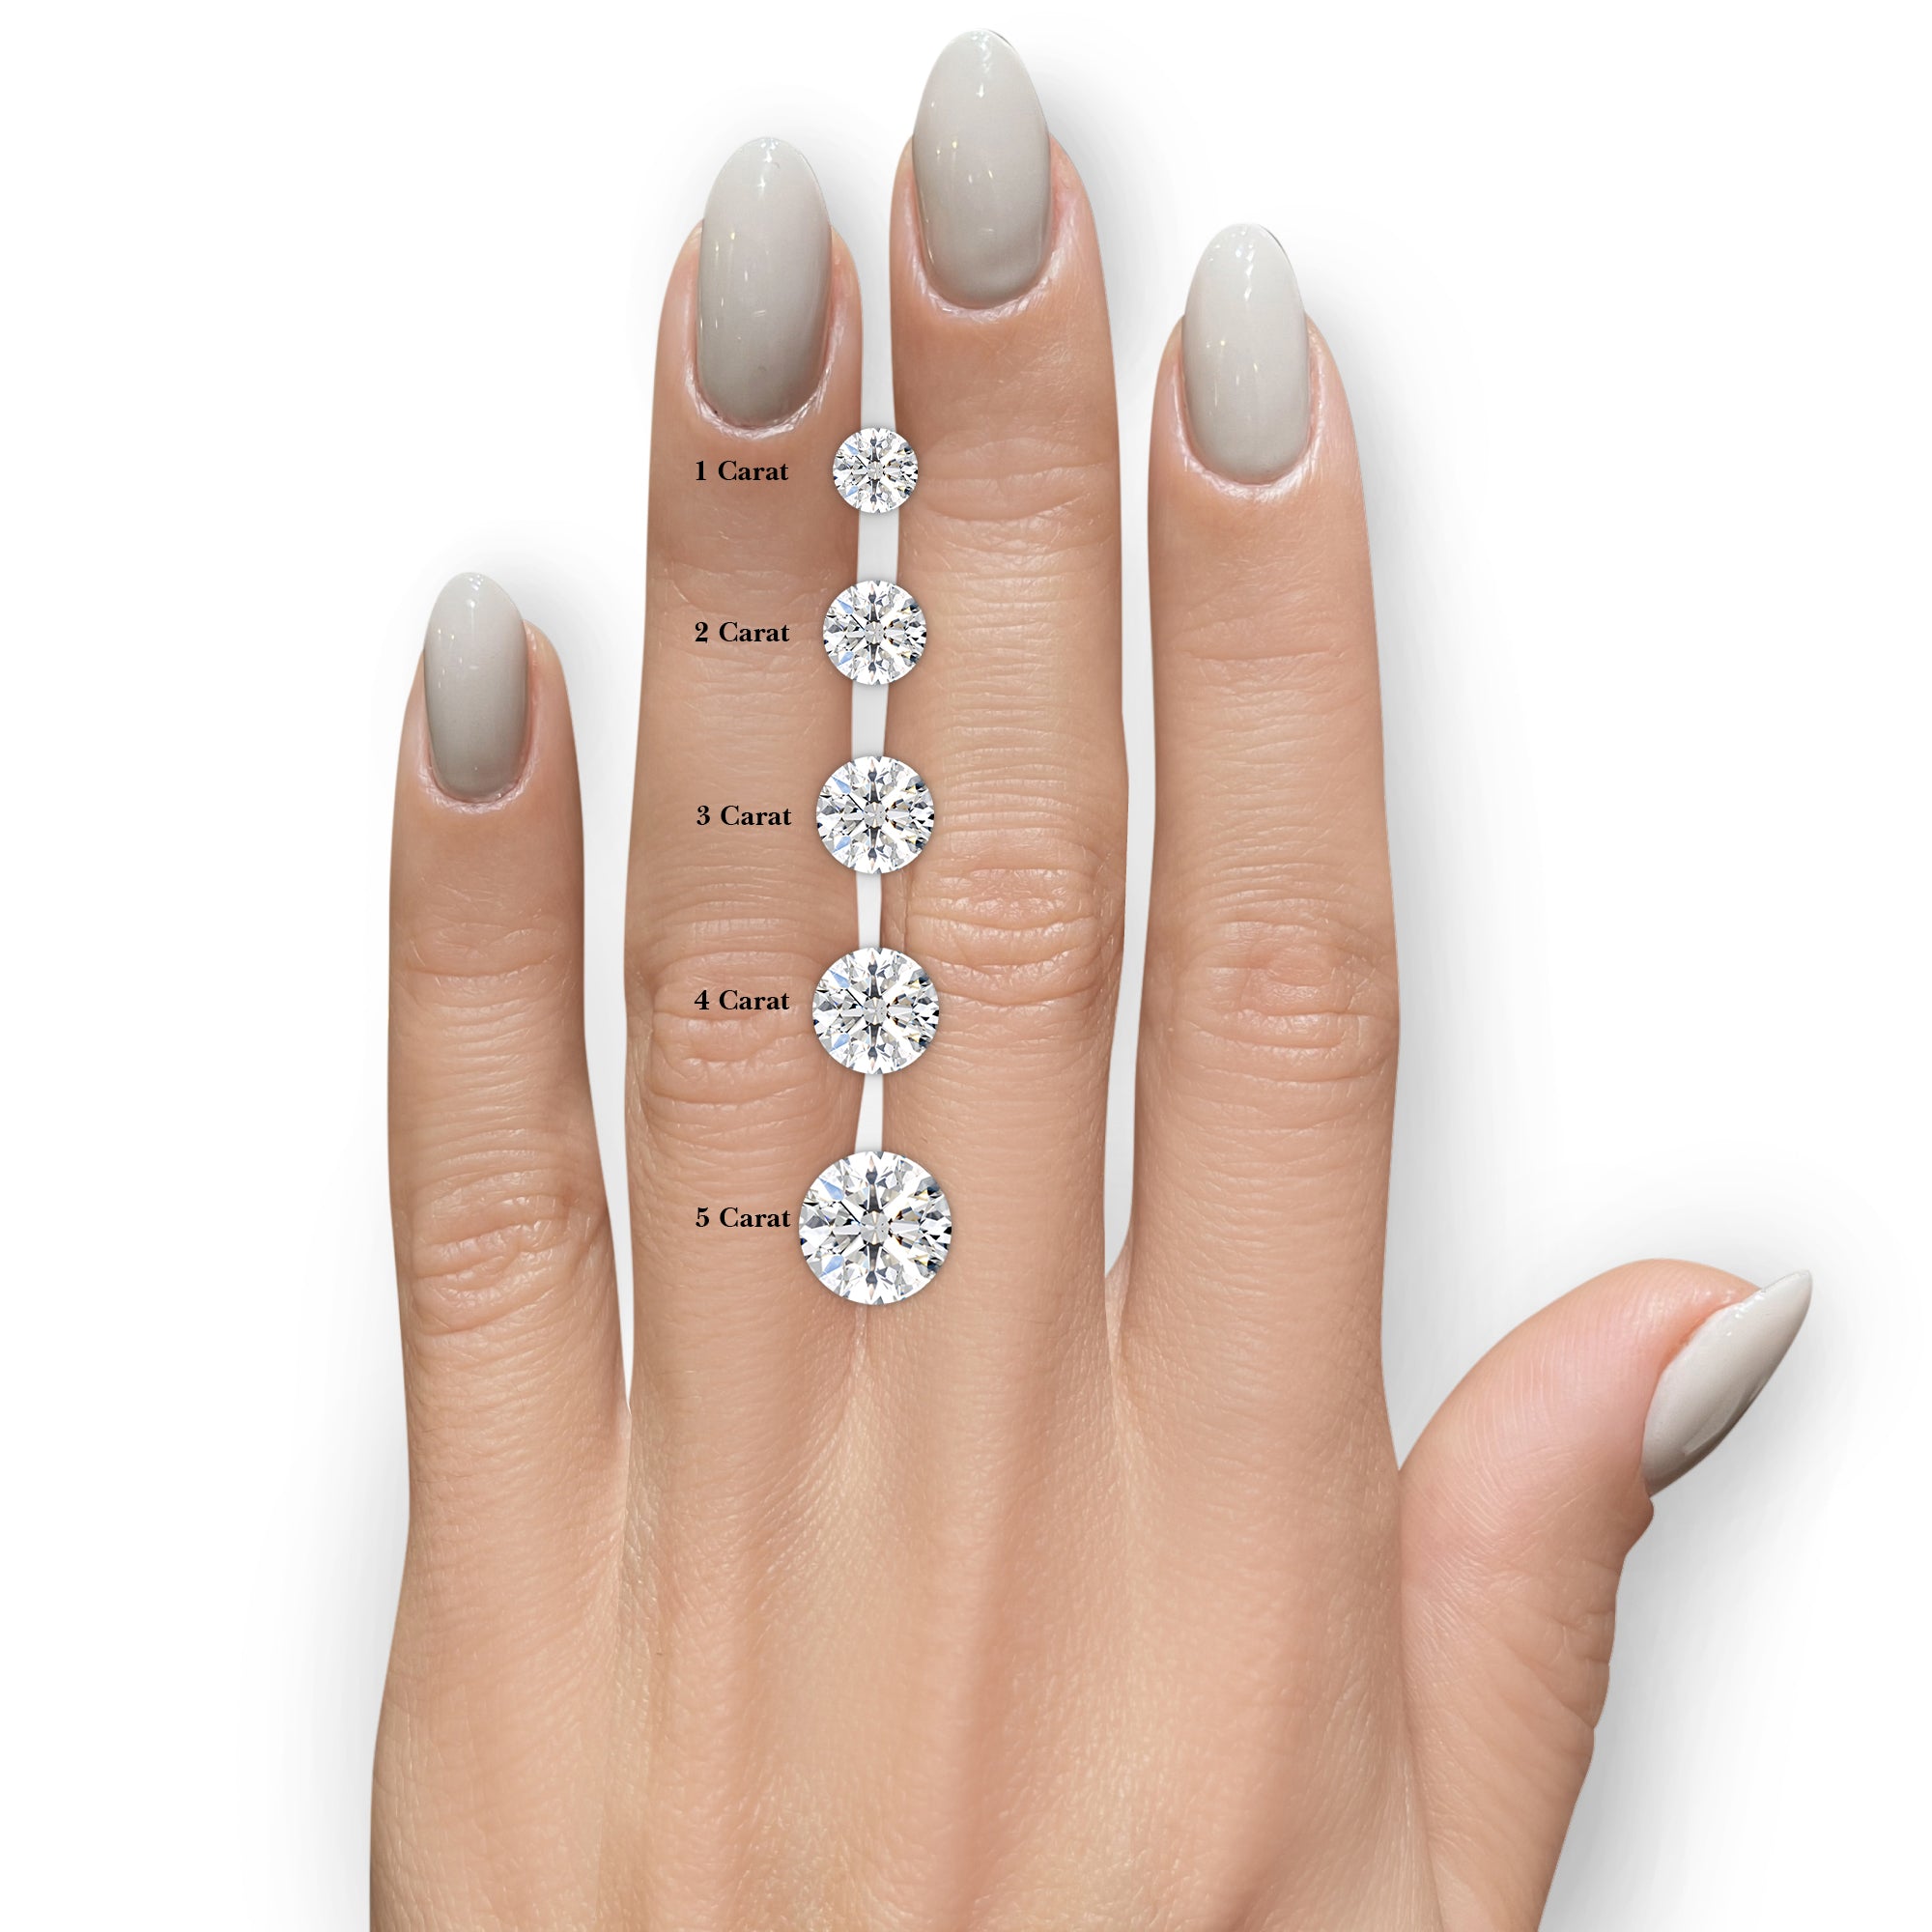 Vivienne Diamond Engagement Ring -18K White Gold